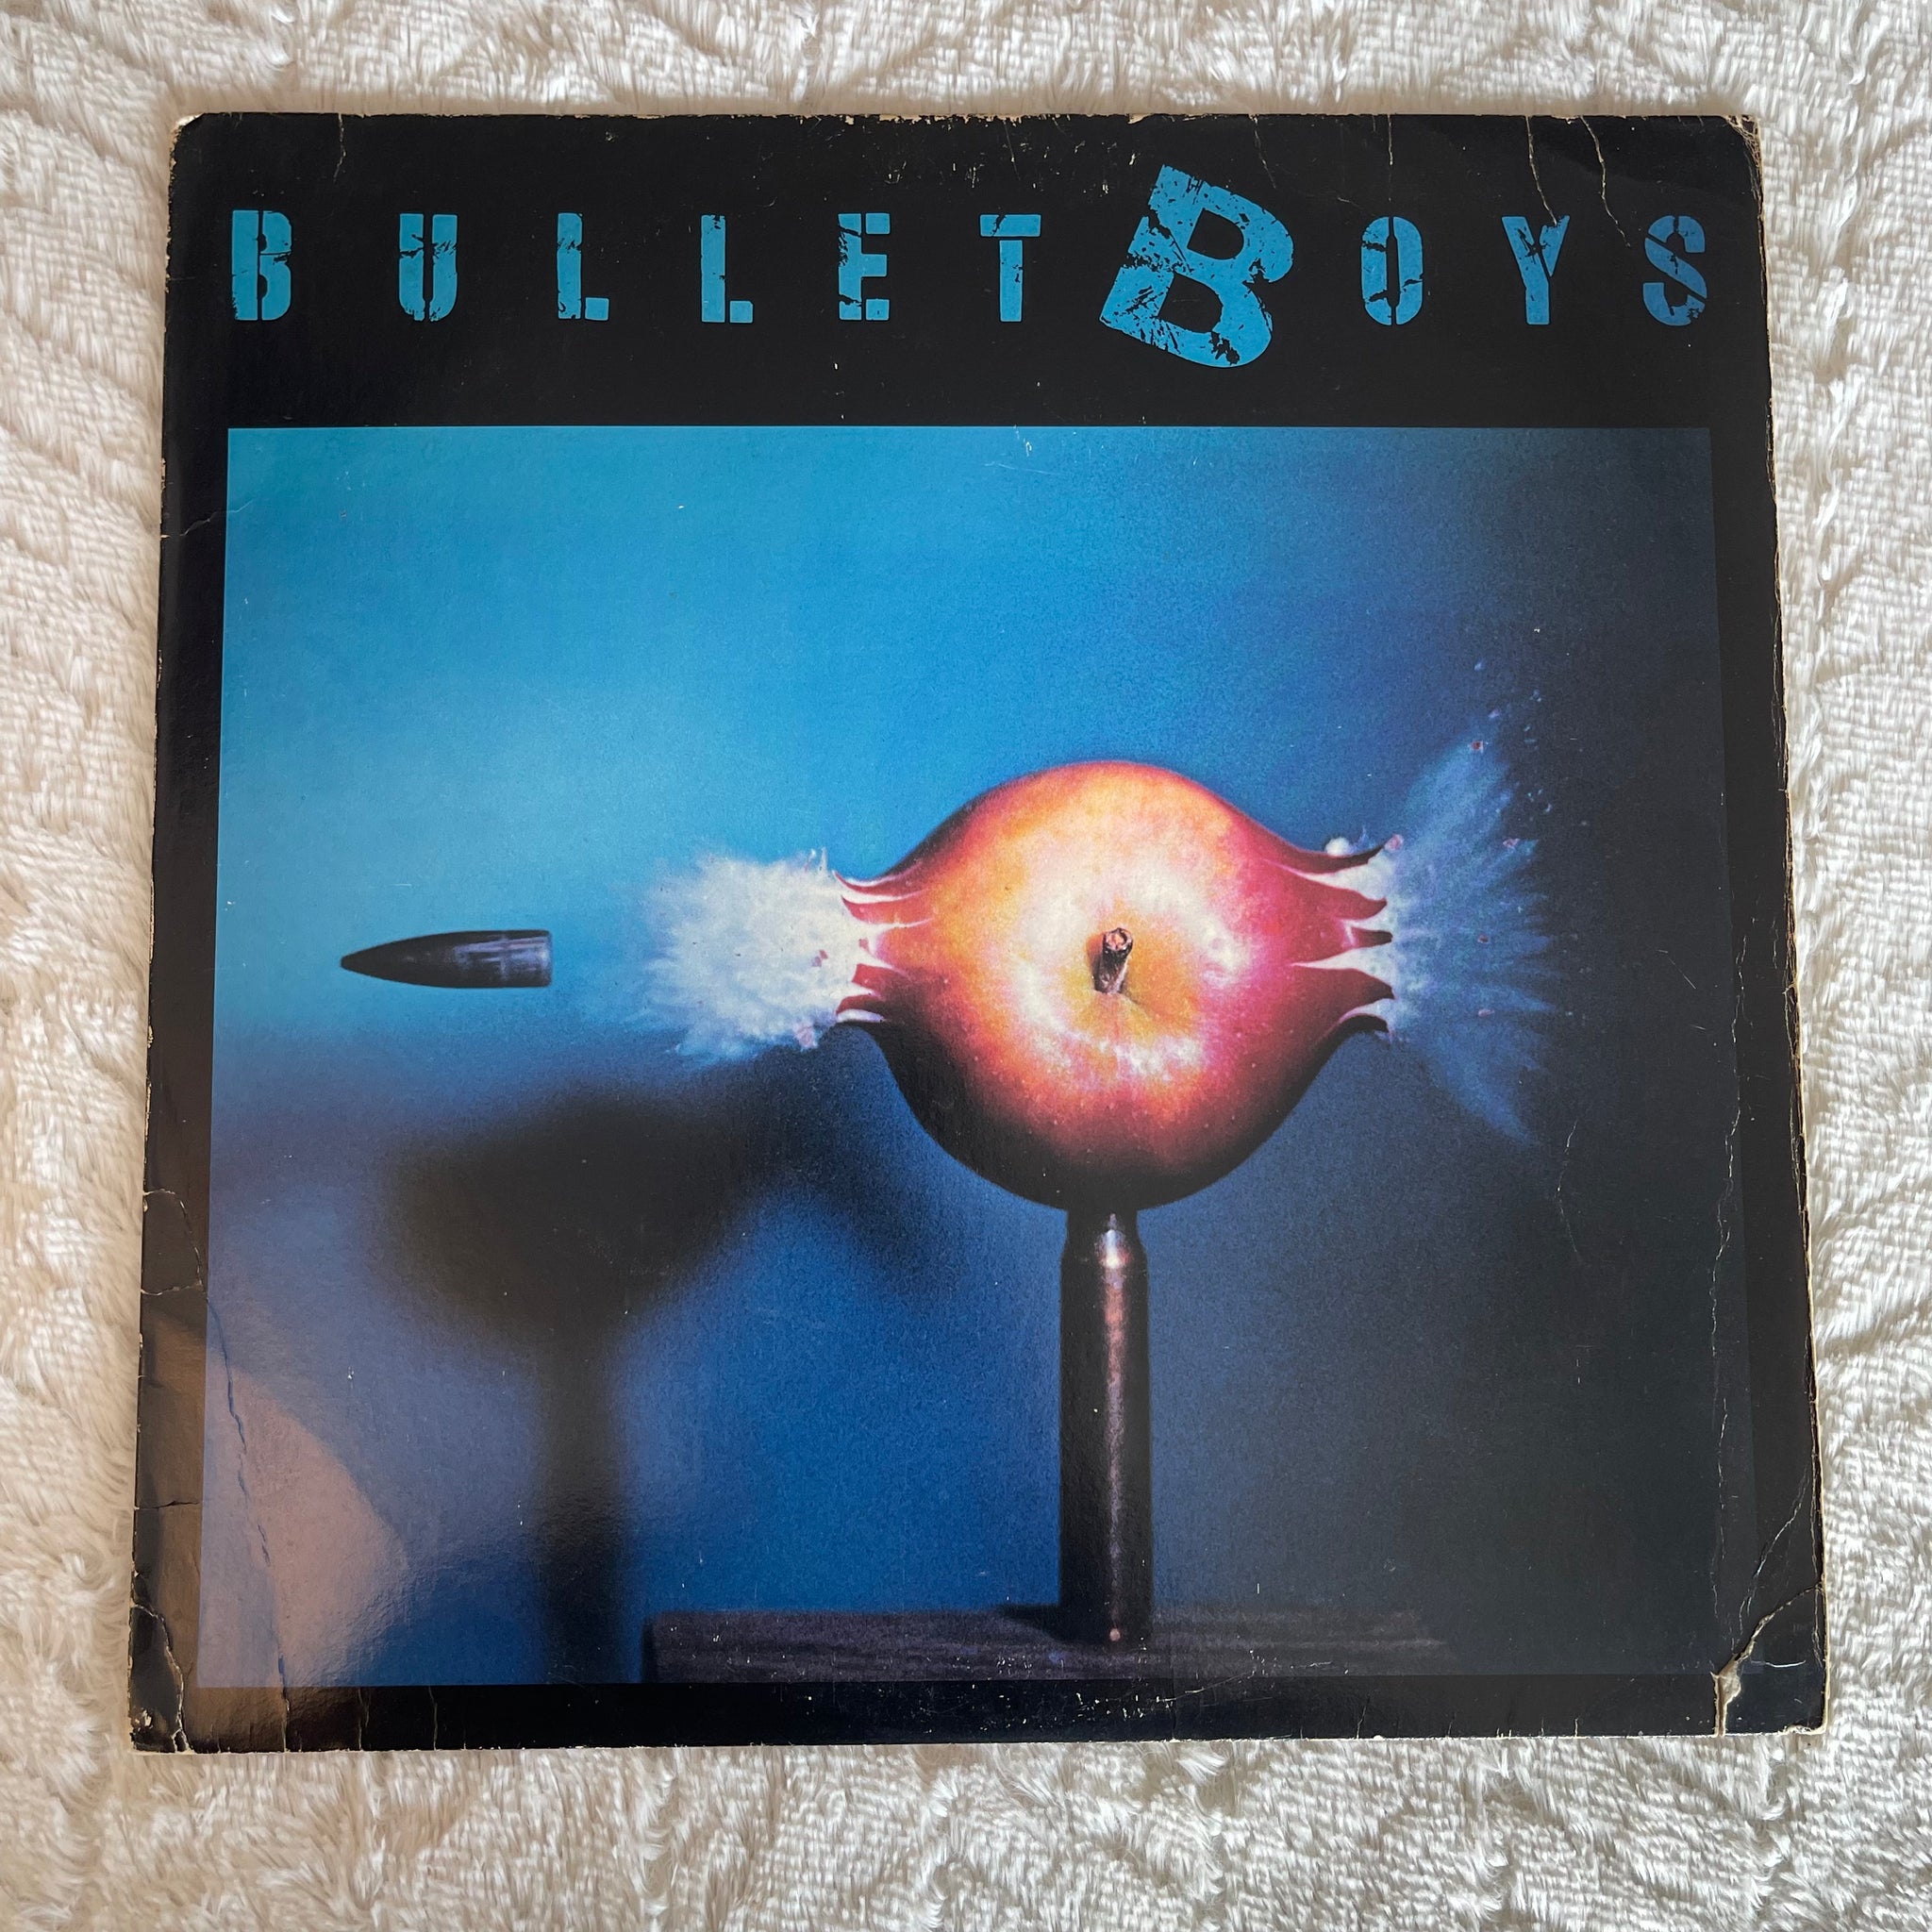 Bullet Boys-Self Titled